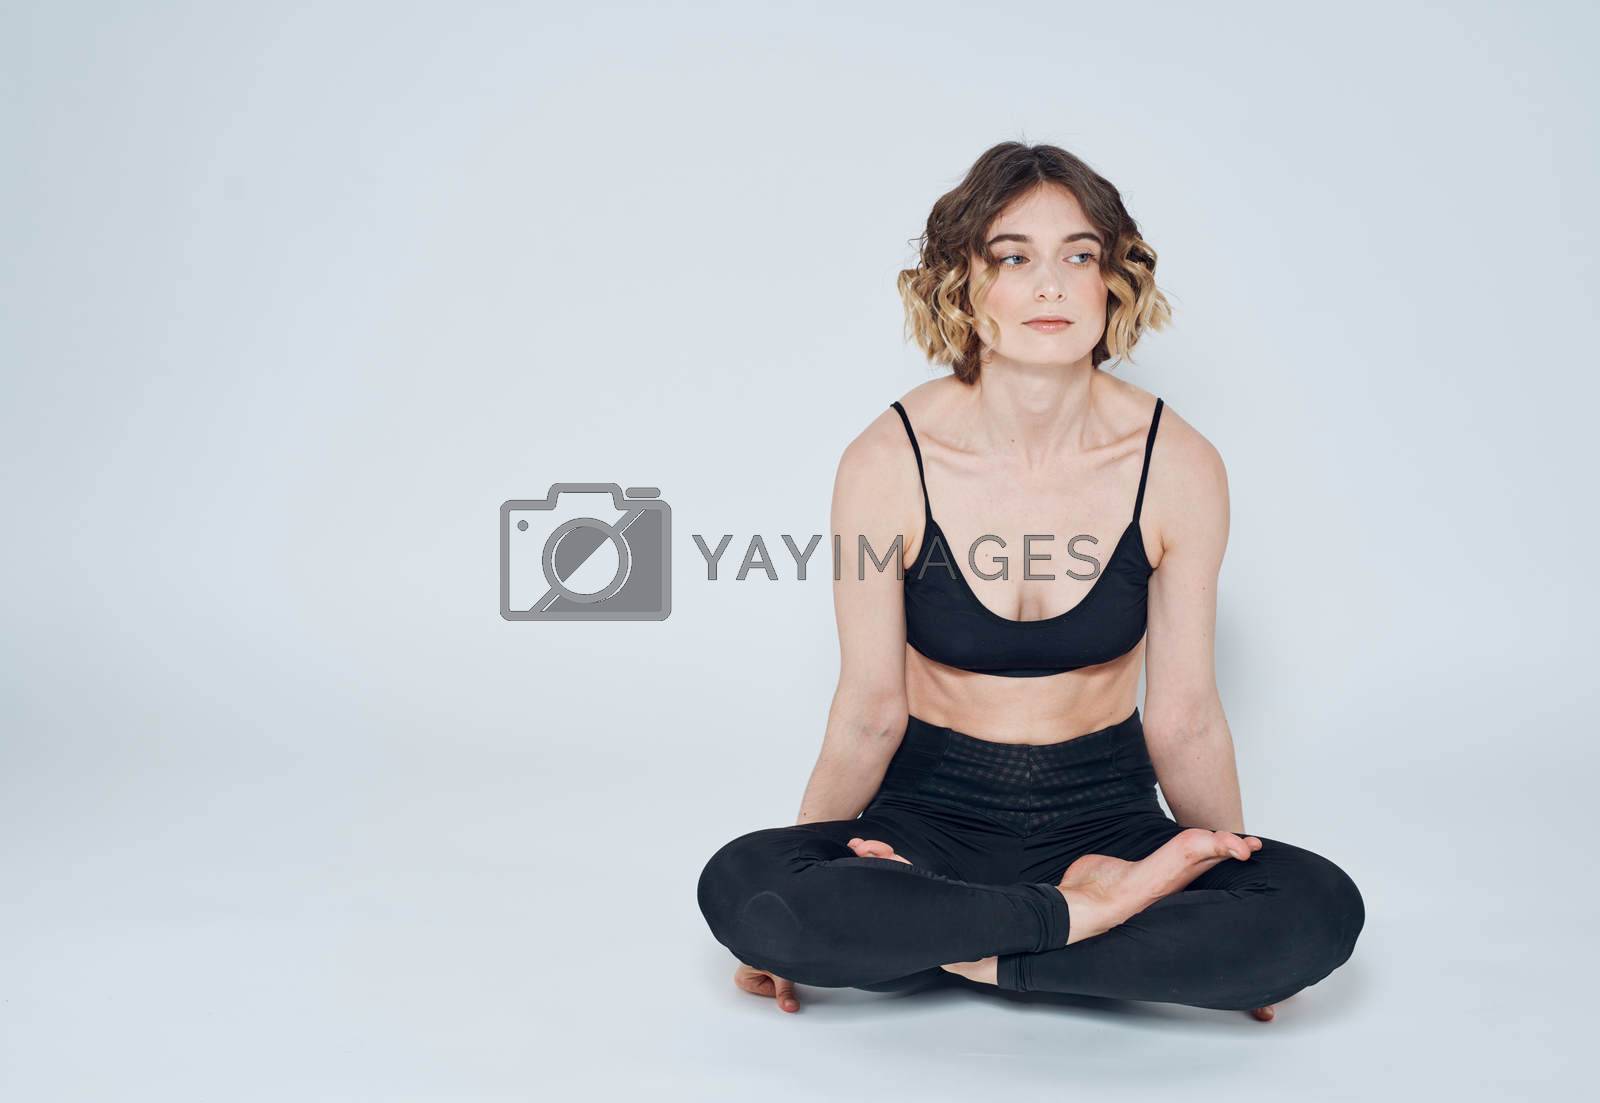 Meditation yoga woman asana light background crossed legs. High quality photo